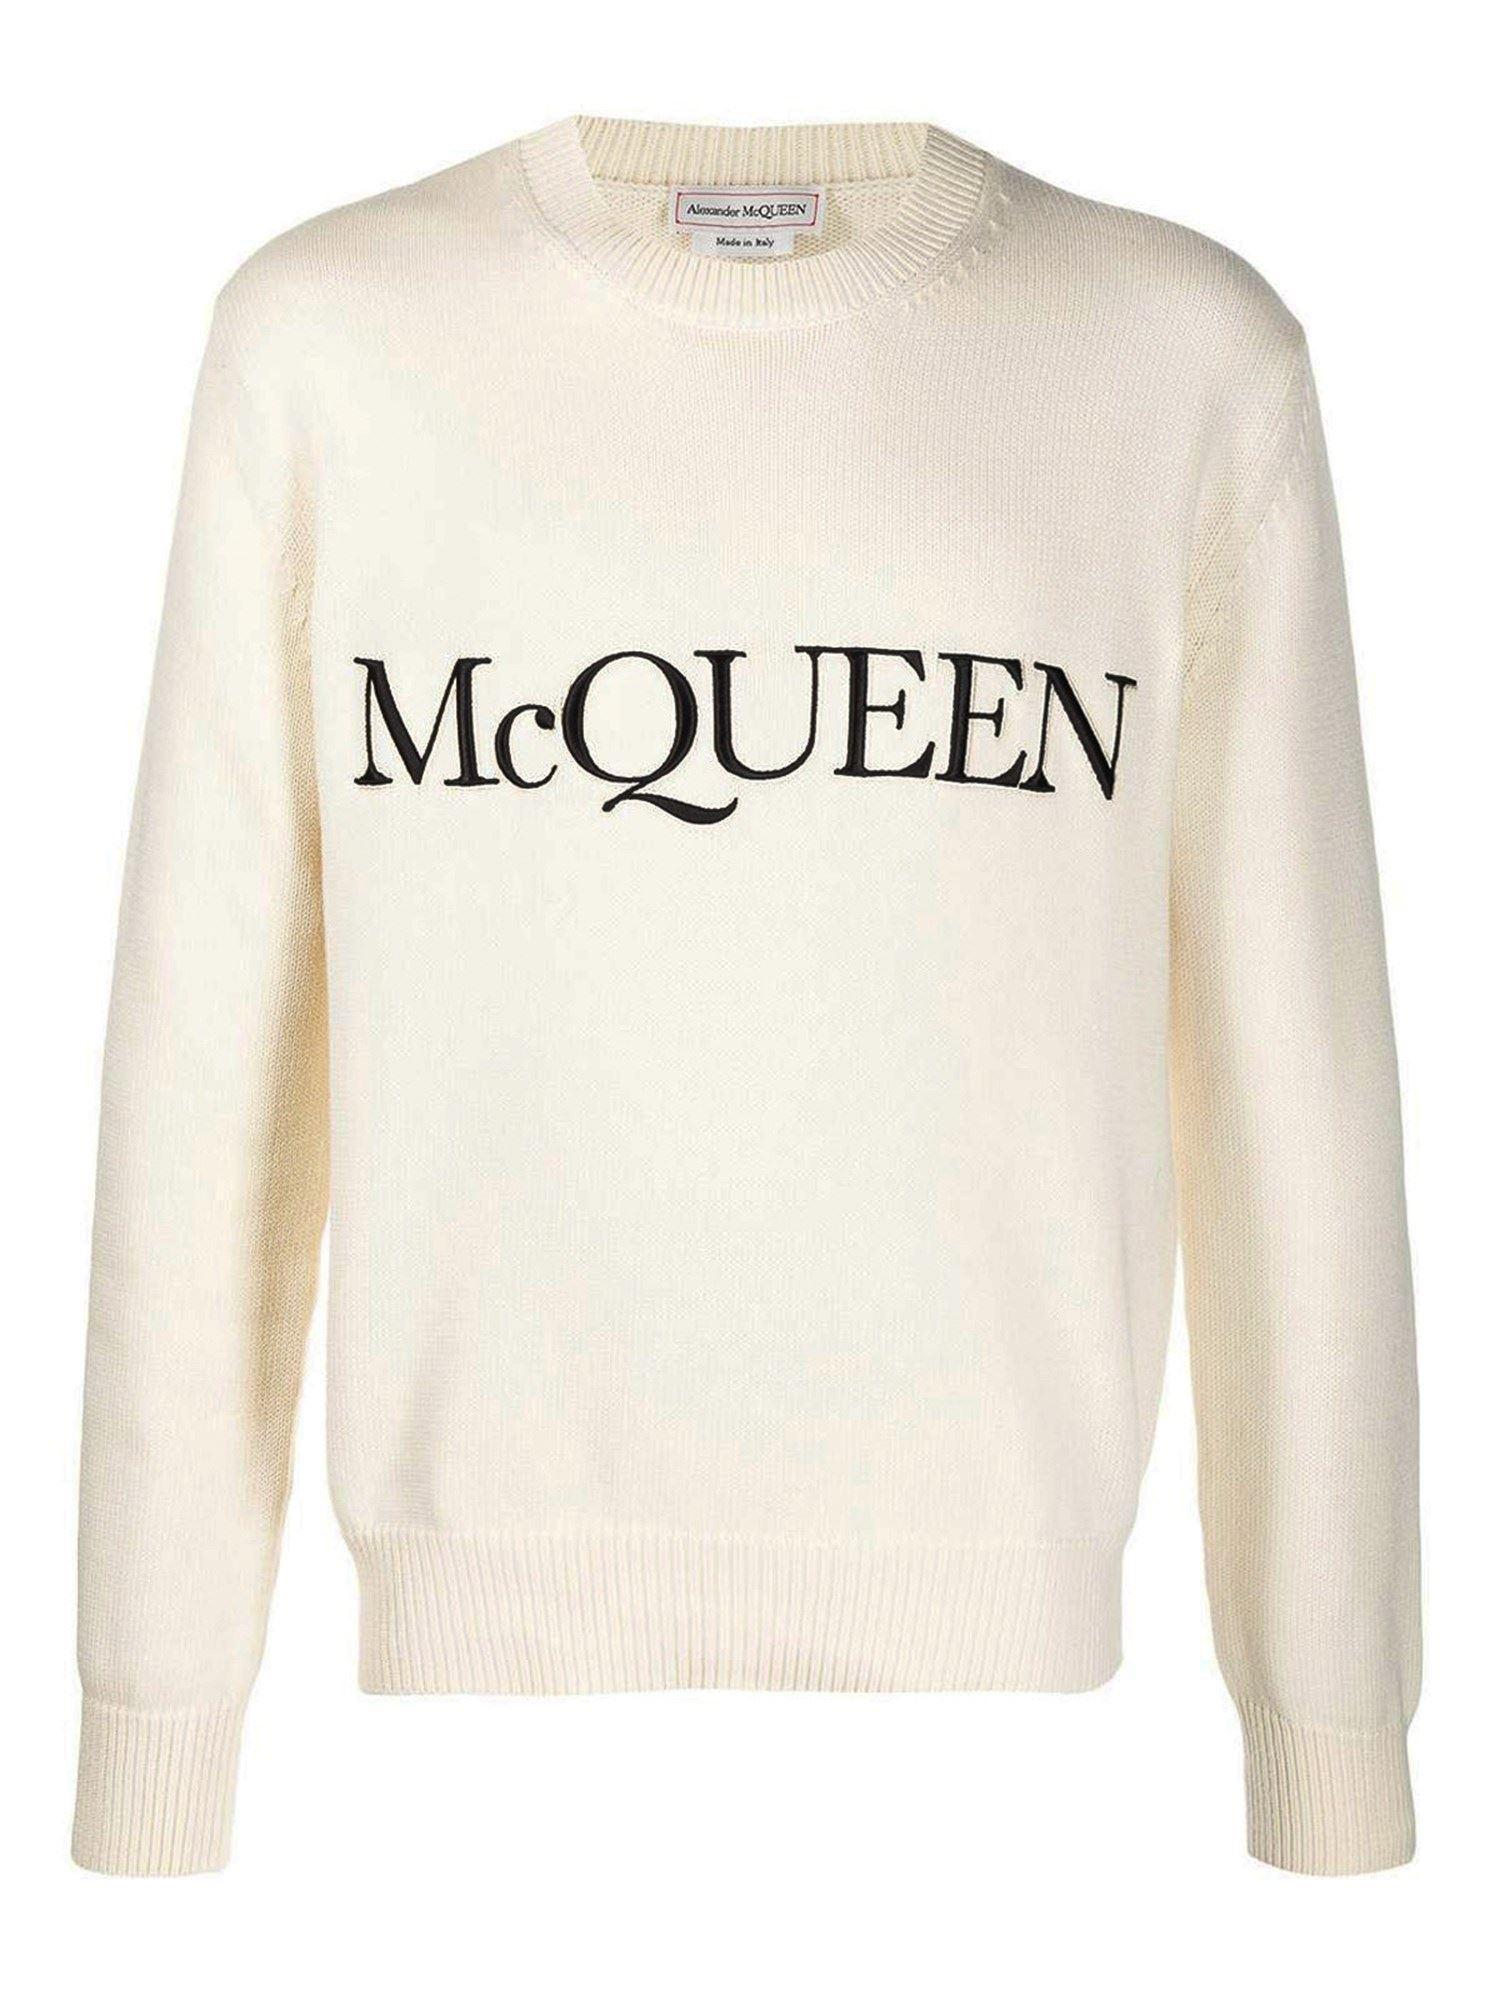 Alexander McQueen Cotton Intarsia Pullover in White for Men - Lyst